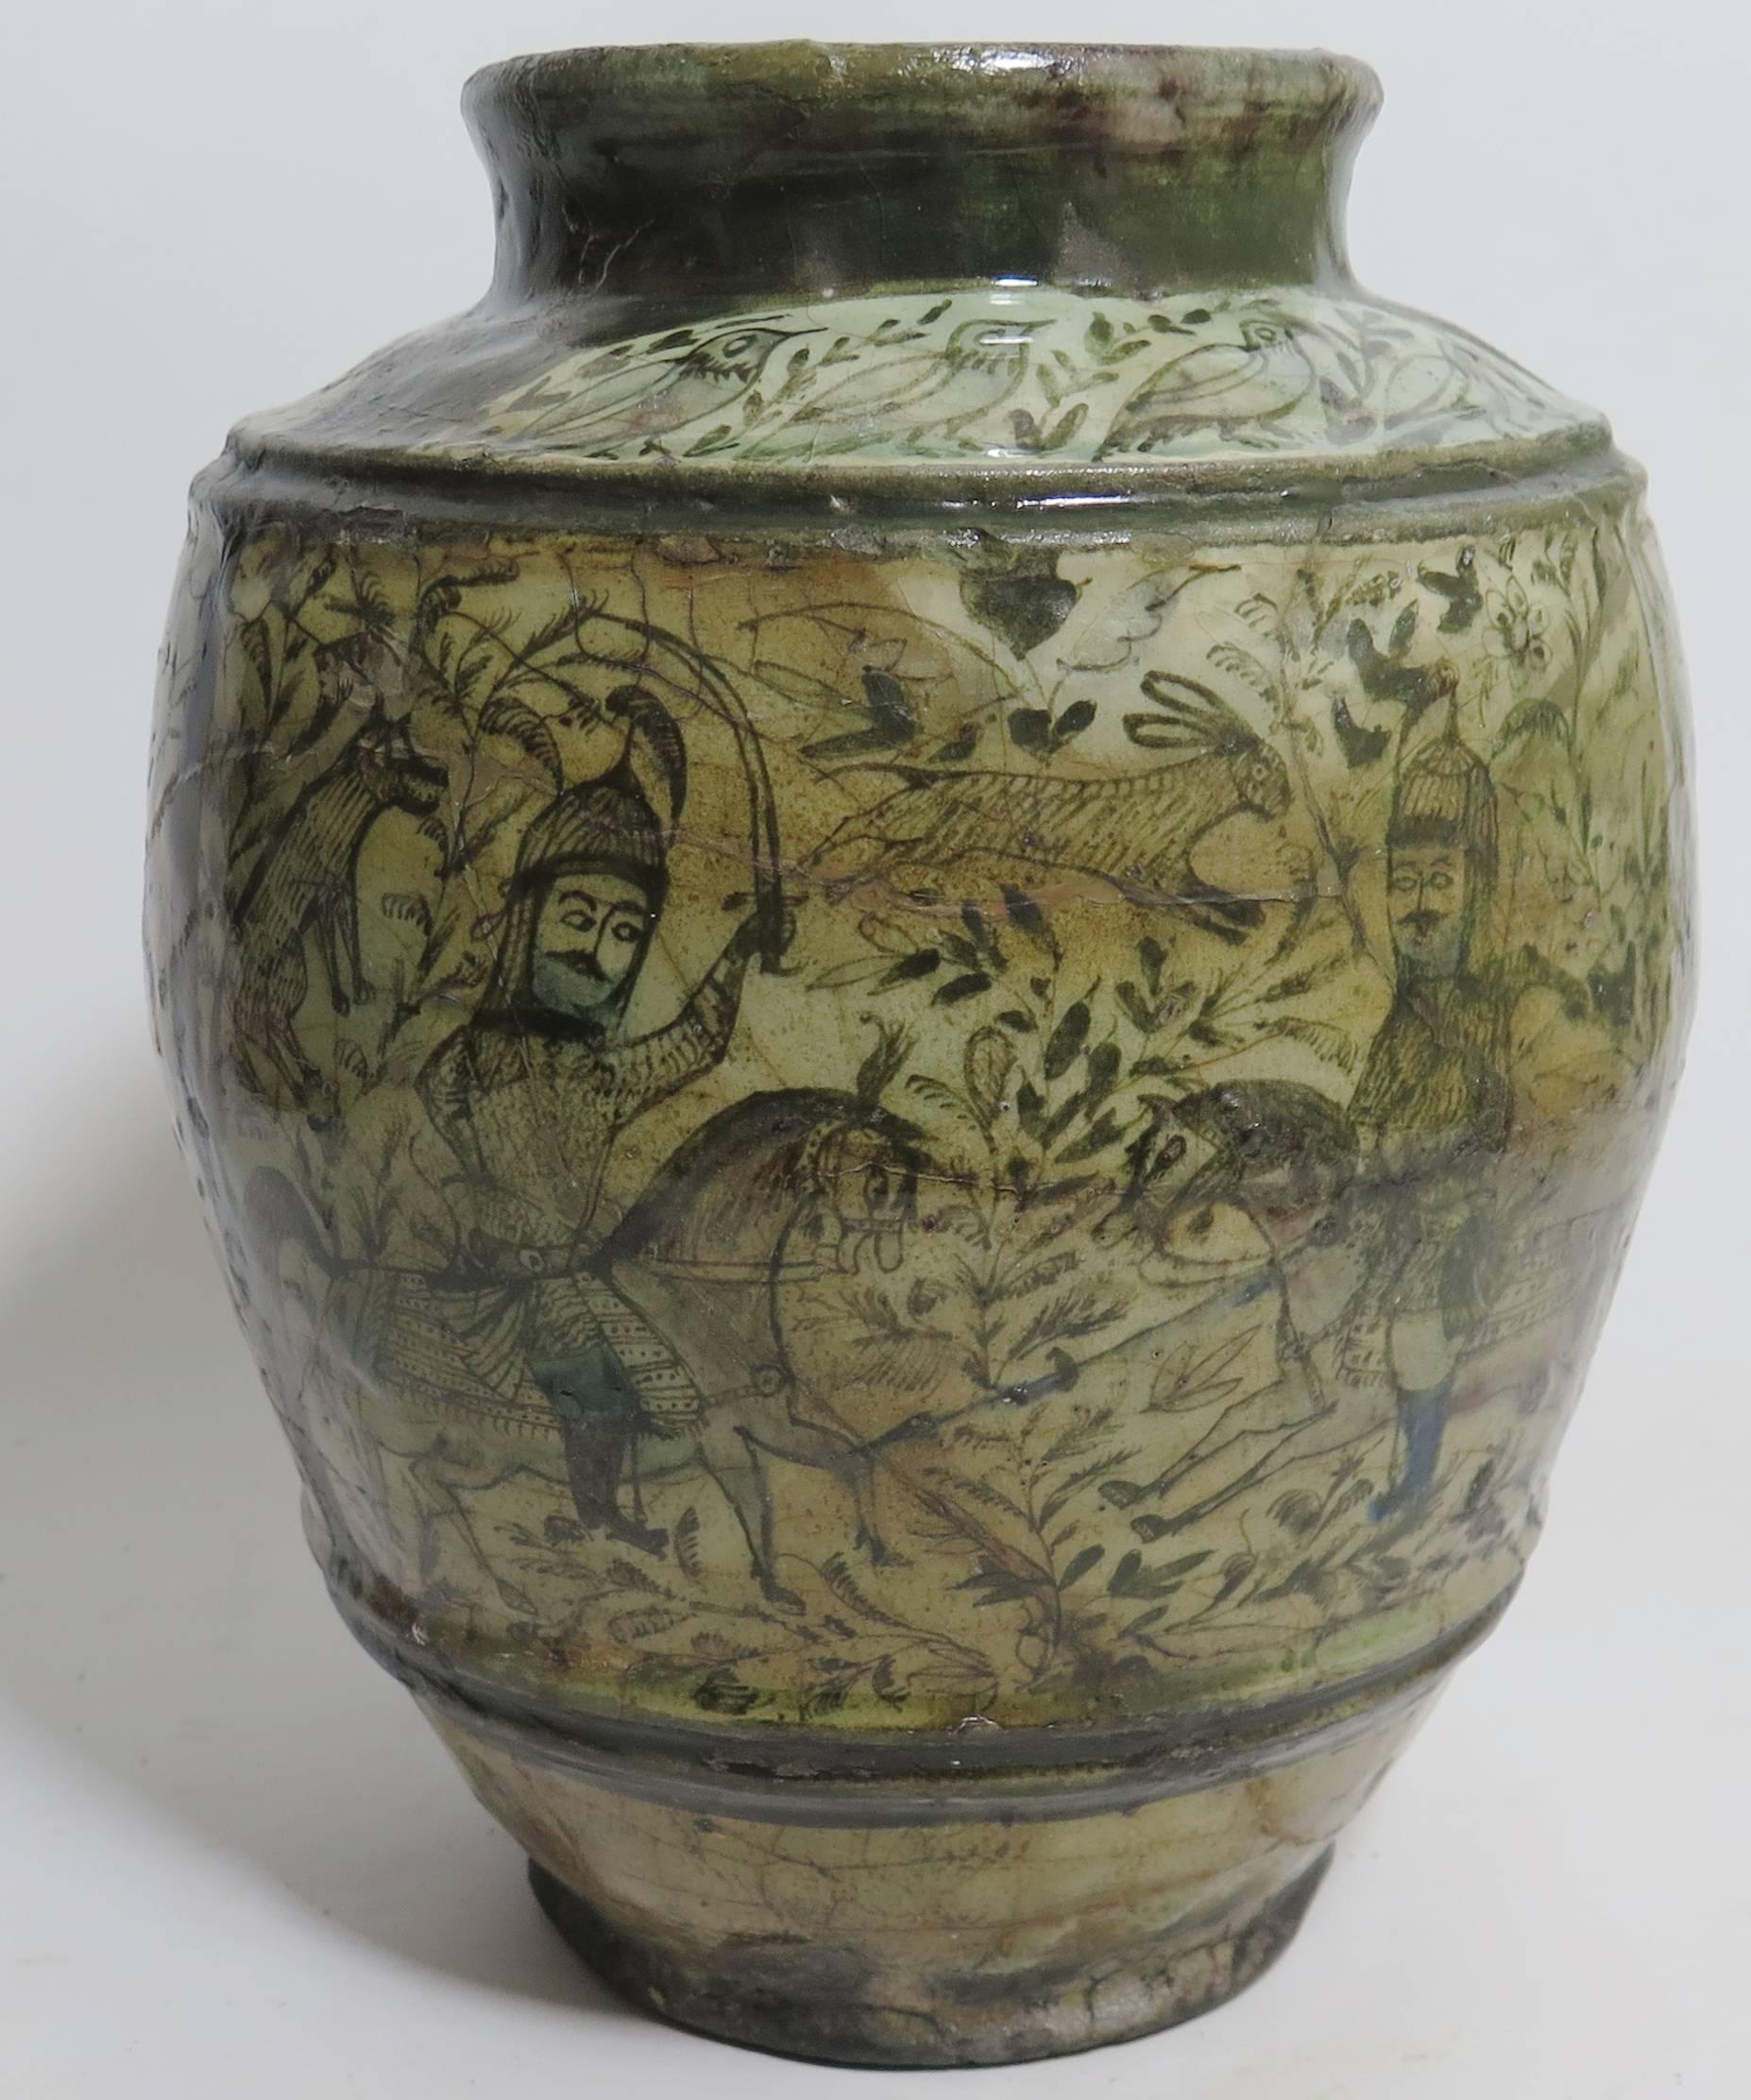 18th Century and Earlier 12th-14th Century Century Persian Jar